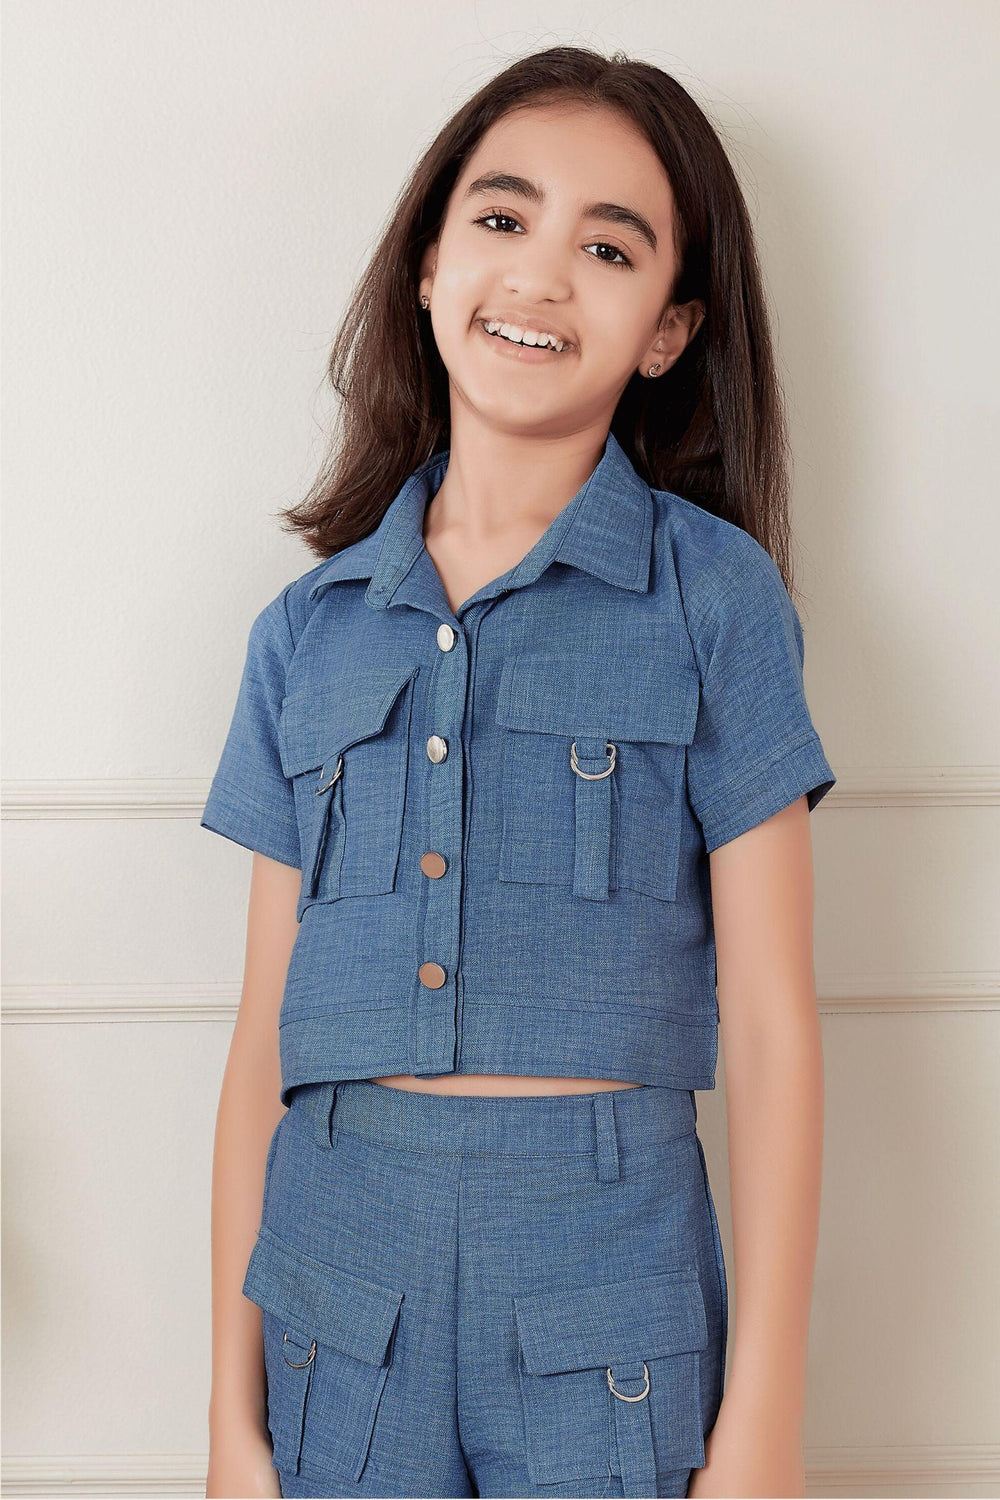 Blue Top and Shorts For Girls - Seasons Chennai